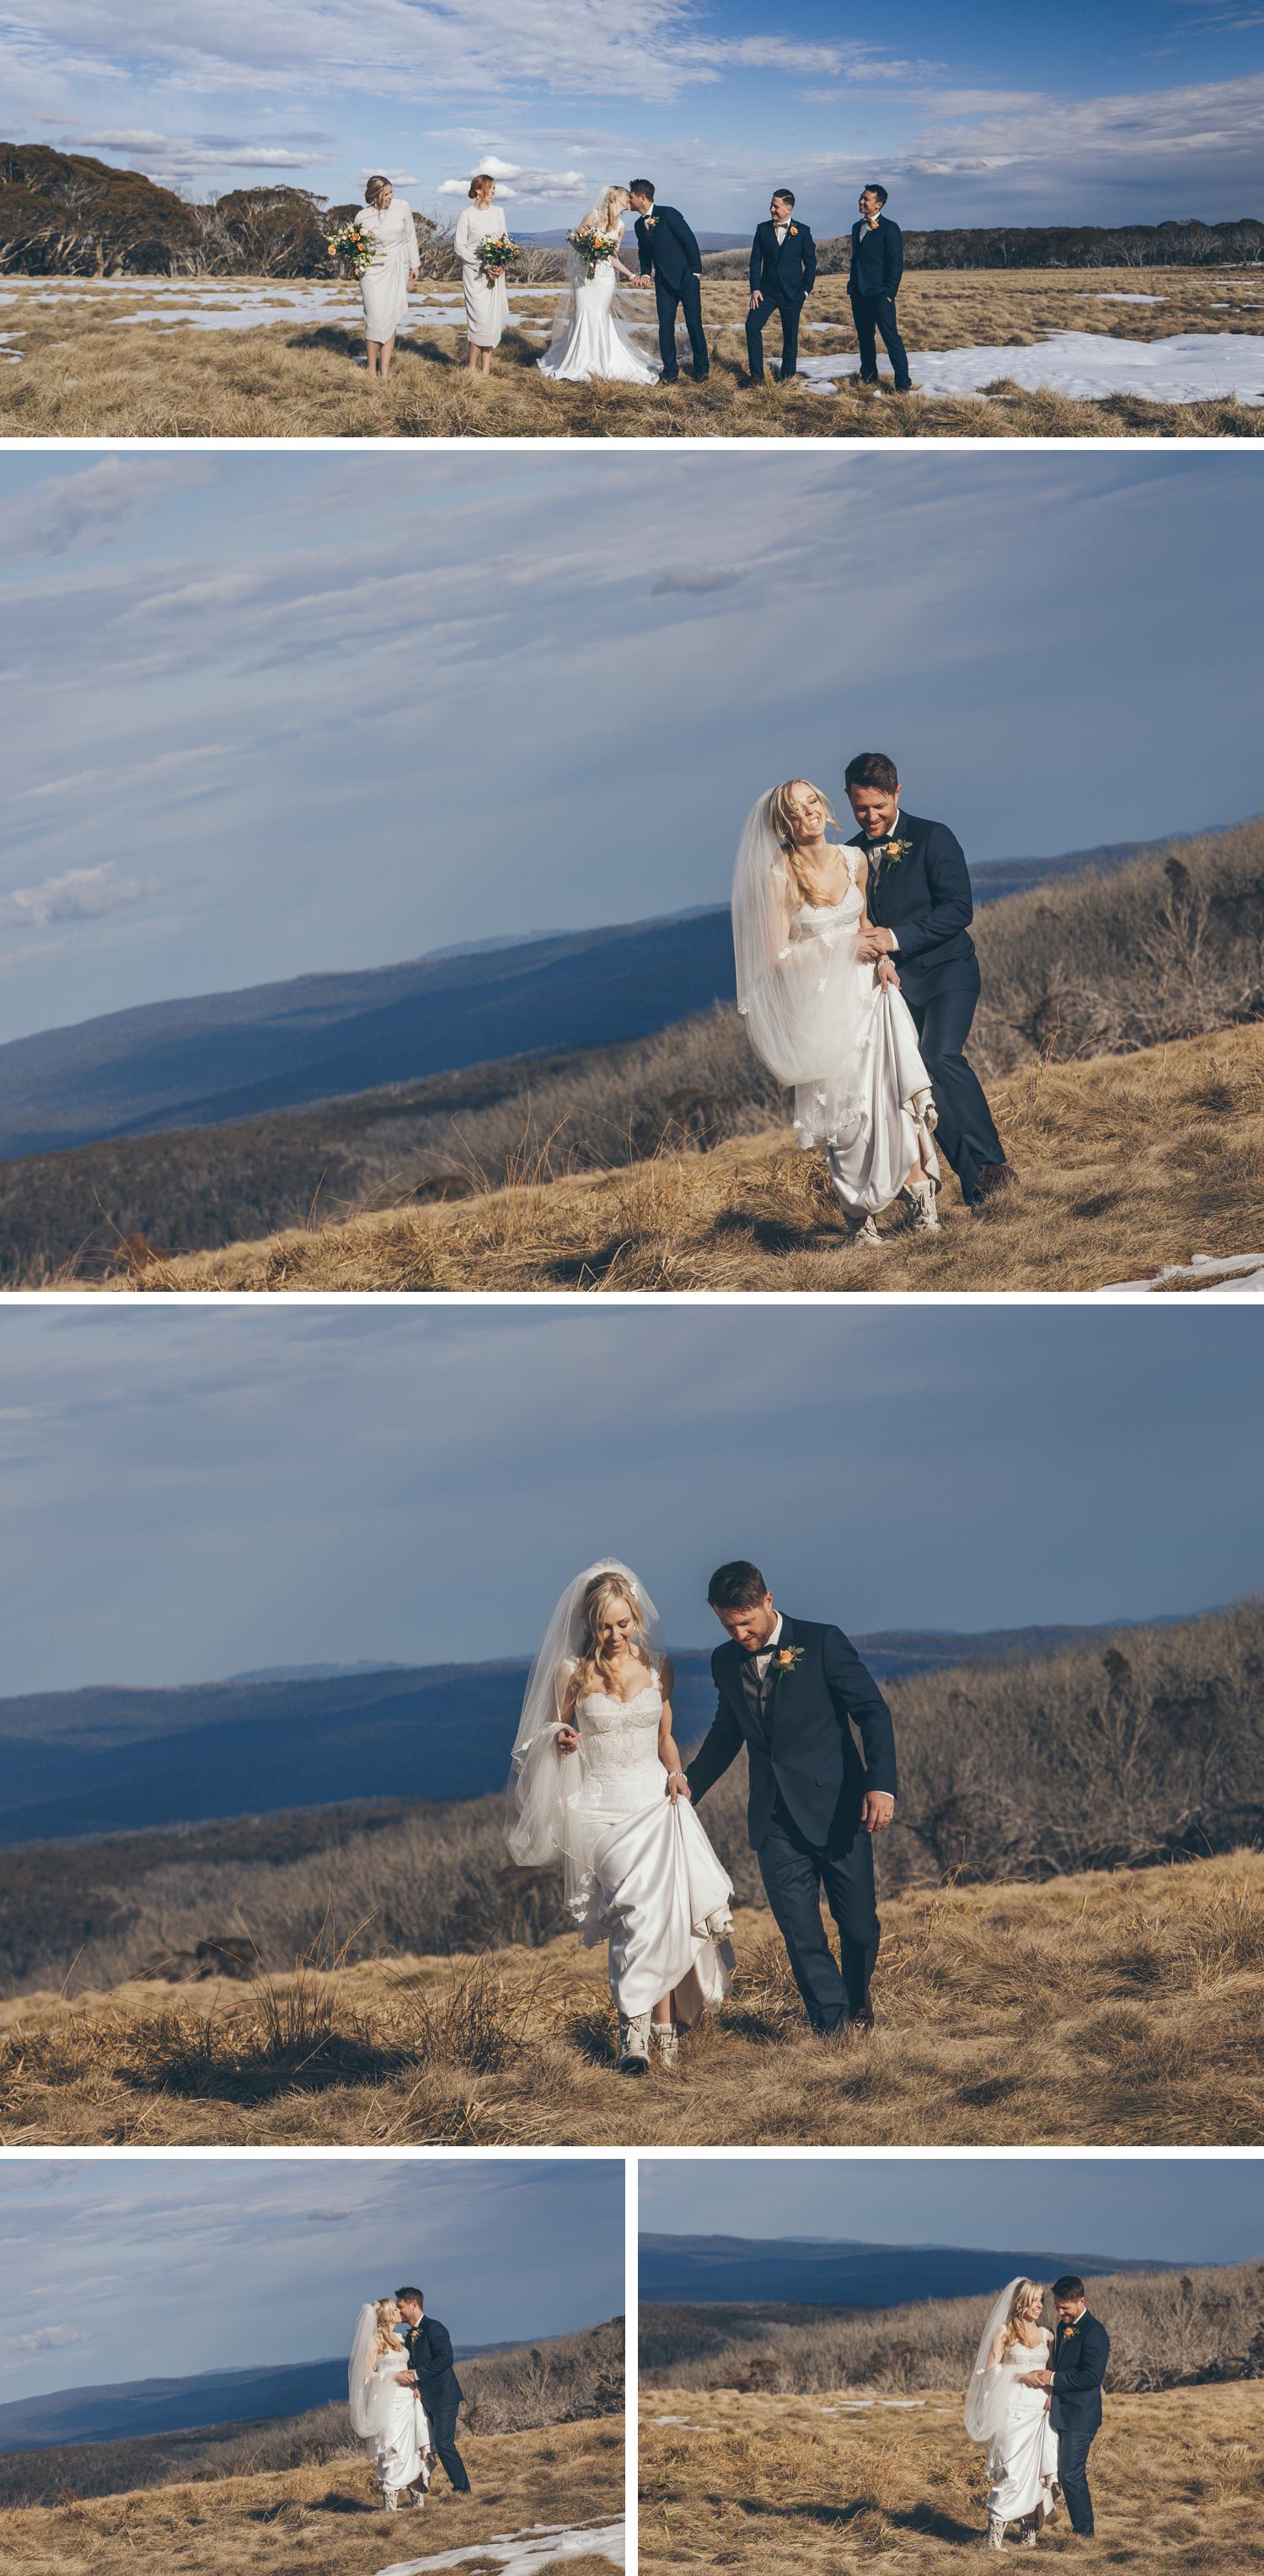 Rundells Alpine Lodge Wedding, Snow Wedding Photos, Beautiful Wedding Photos by Danae Studios, Bride and Groom Embracing